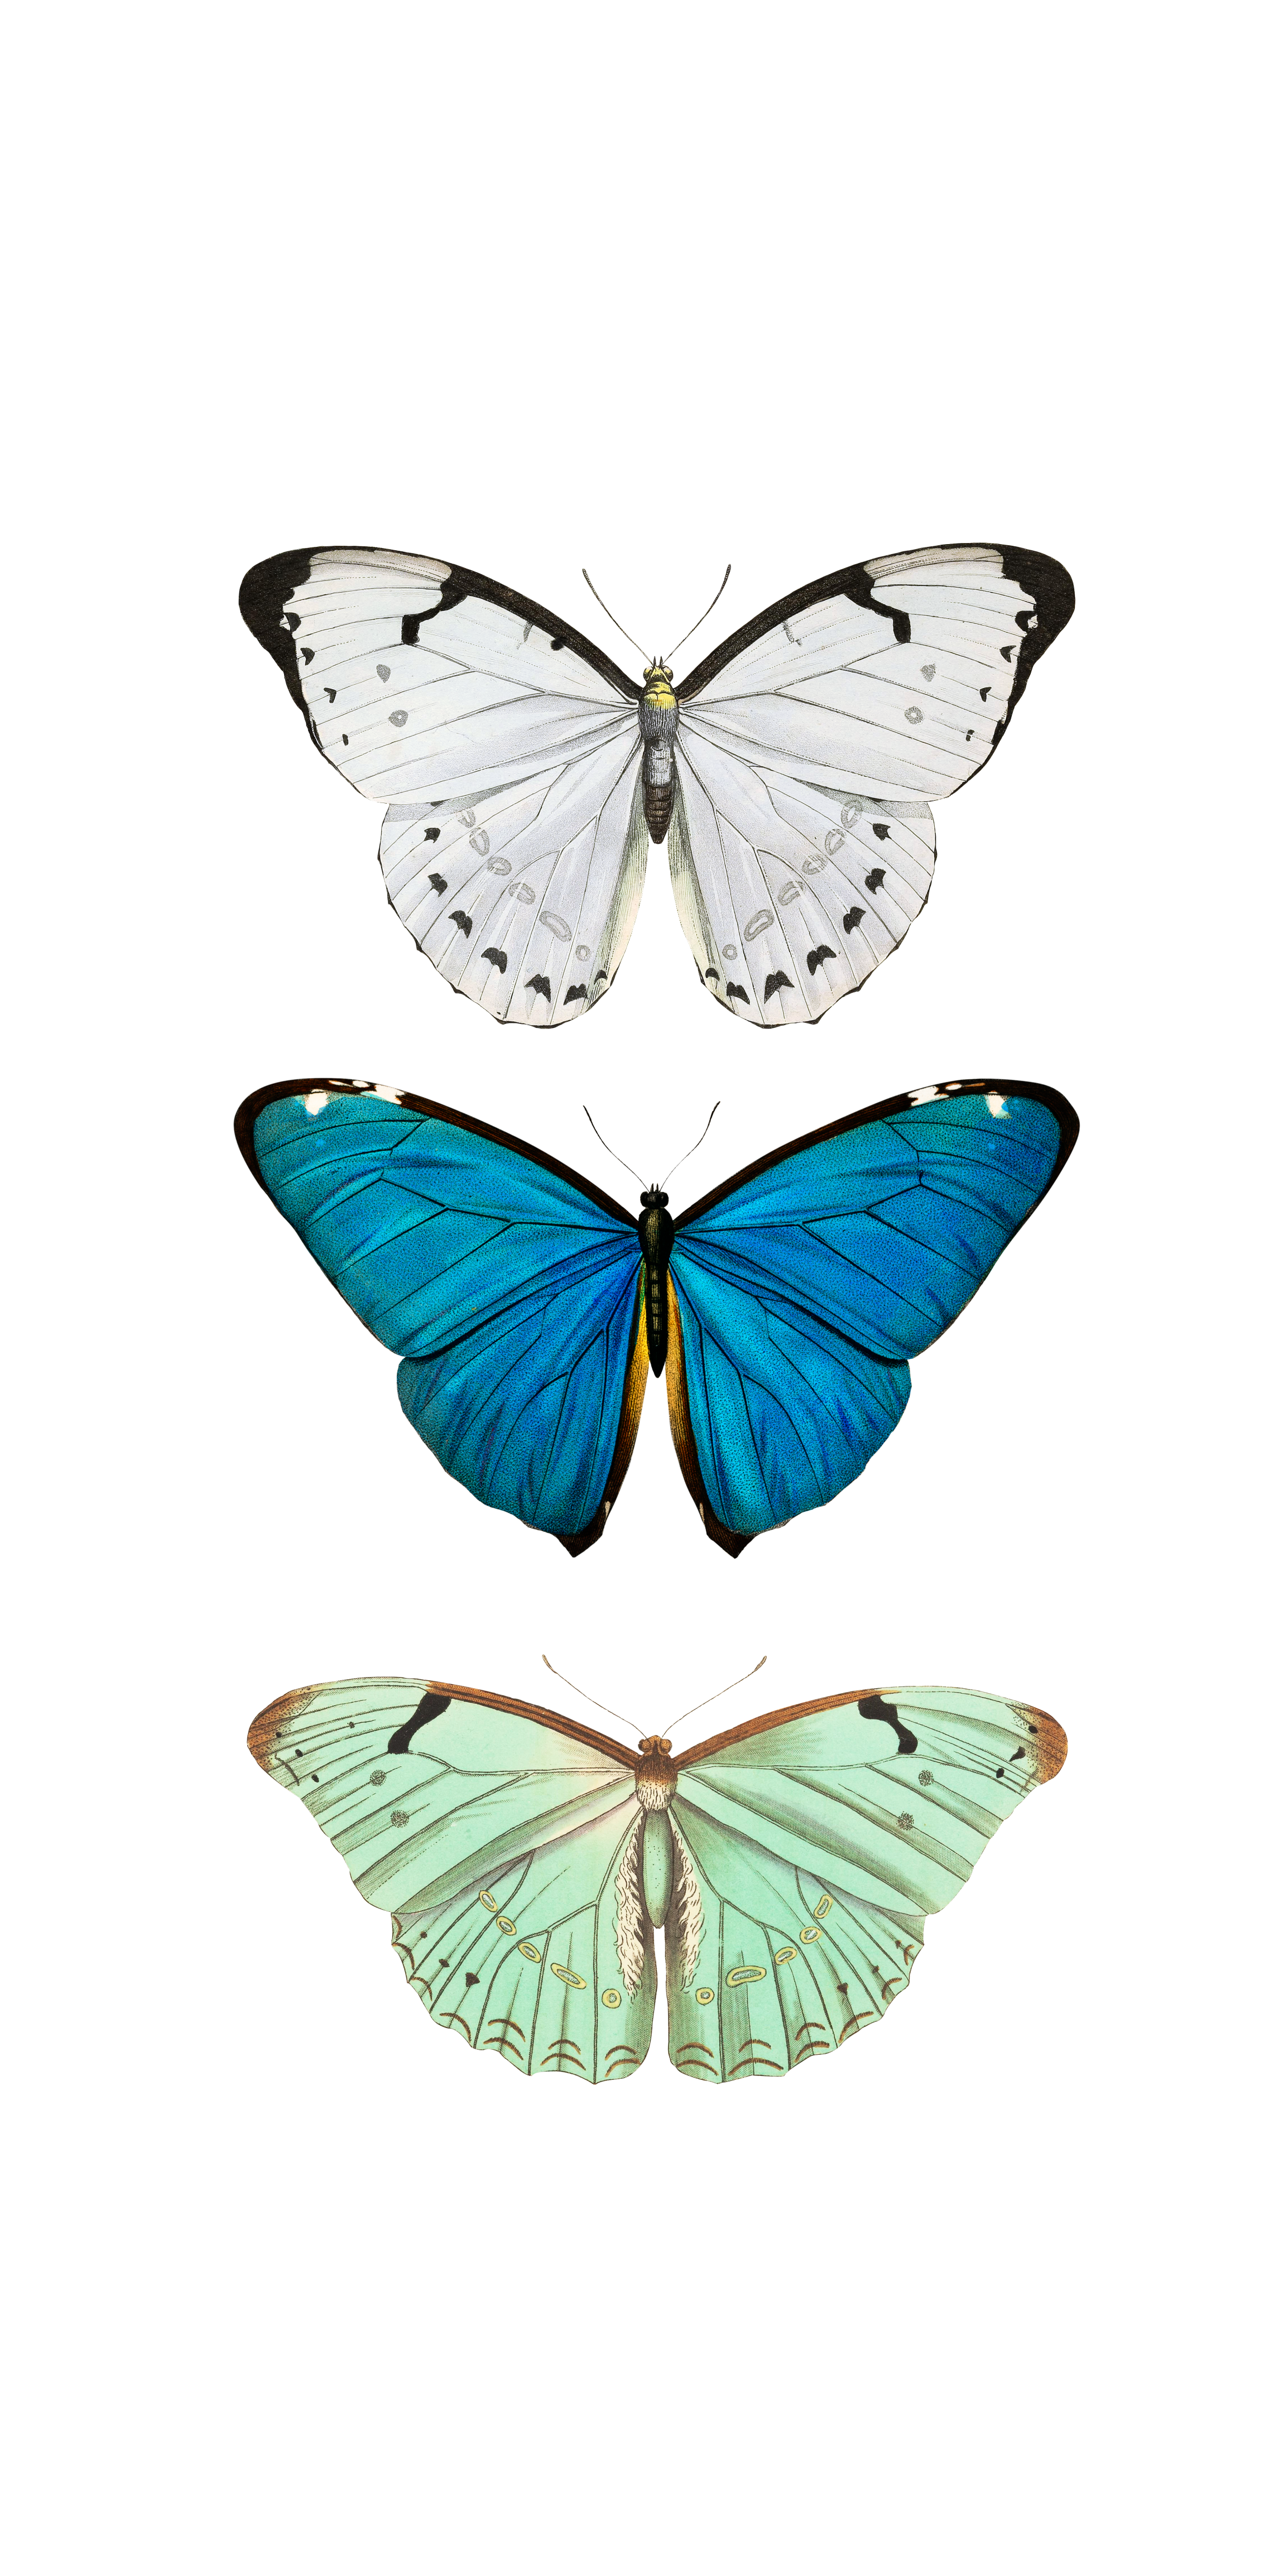 Iphone X Butterfly - HD Wallpaper 